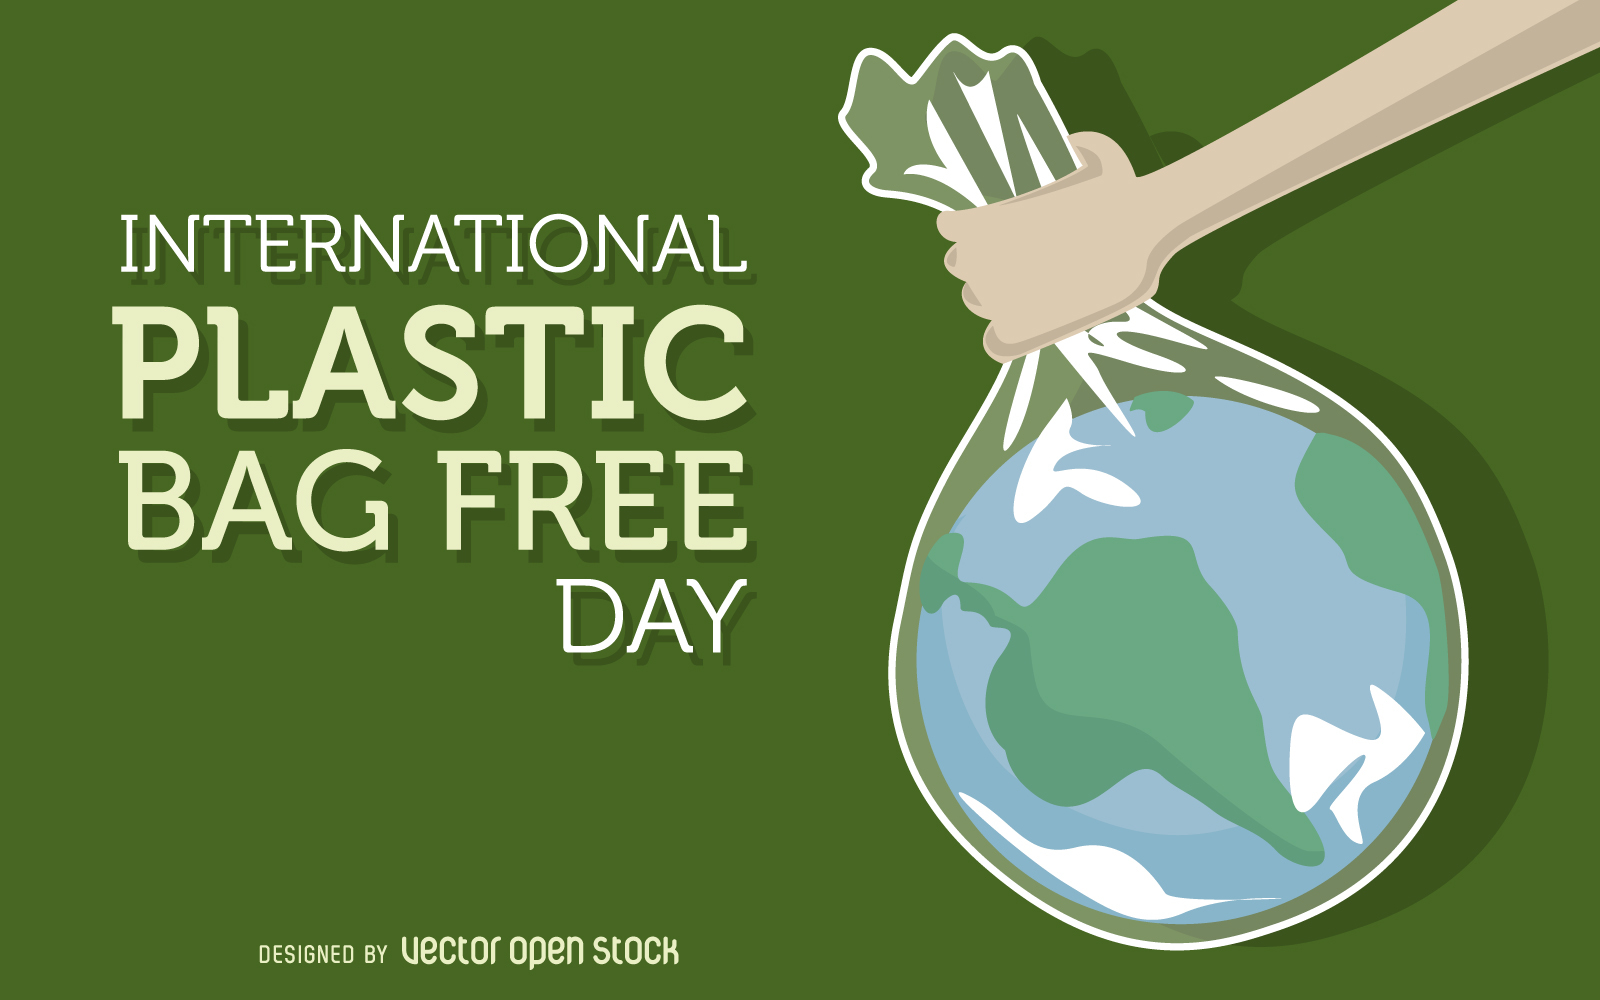 International plastic bag free day Greenpage